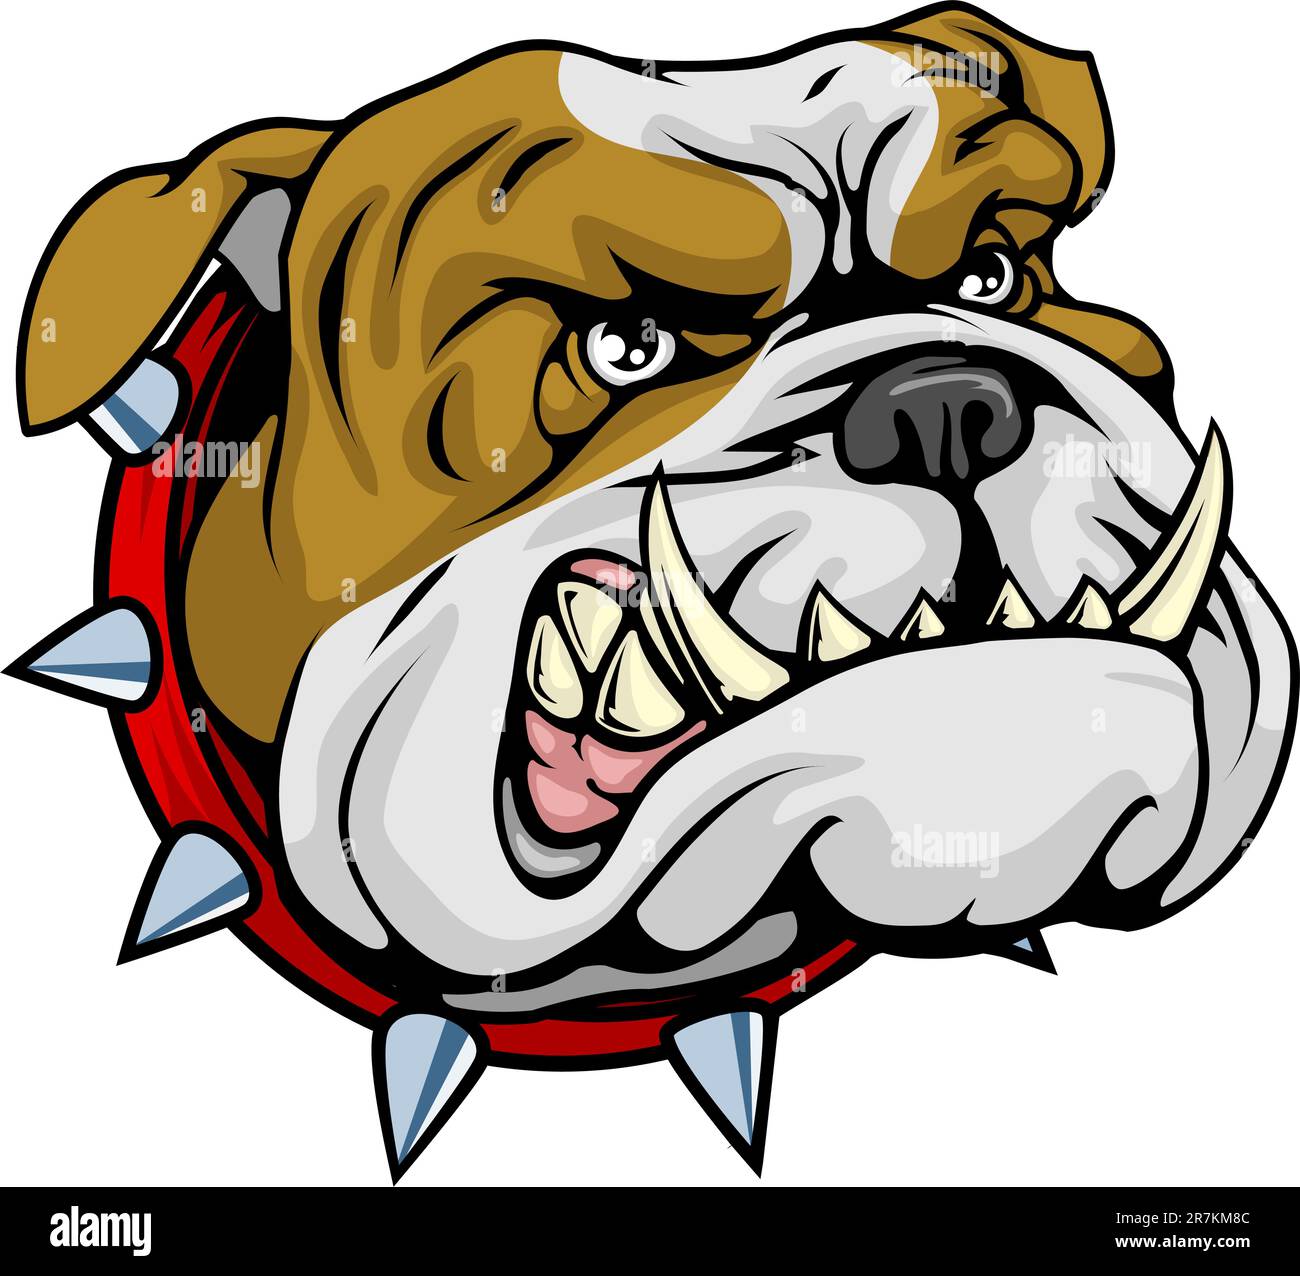 Mean looking illustration of classic British bulldog face Stock Vector